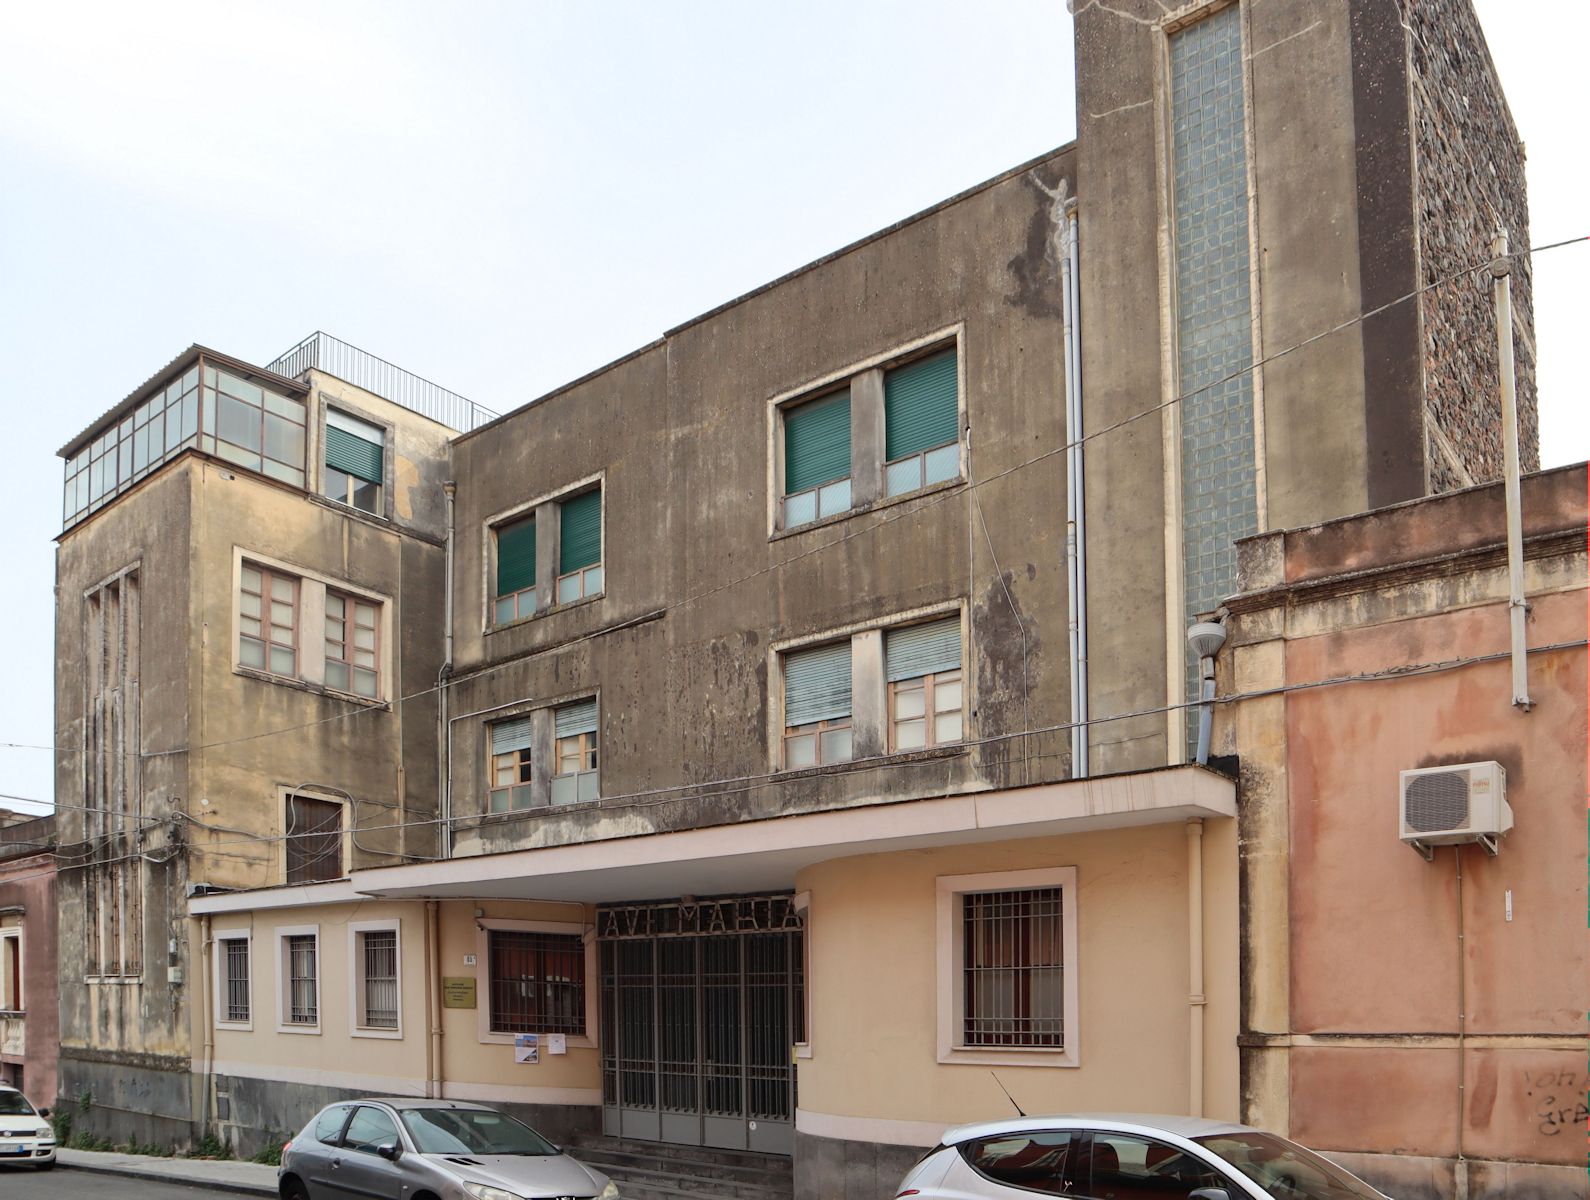 ehemaliges Ordenshaus der „Figlie di Maria Ausiliatrice” in Catania, heute eine Schule